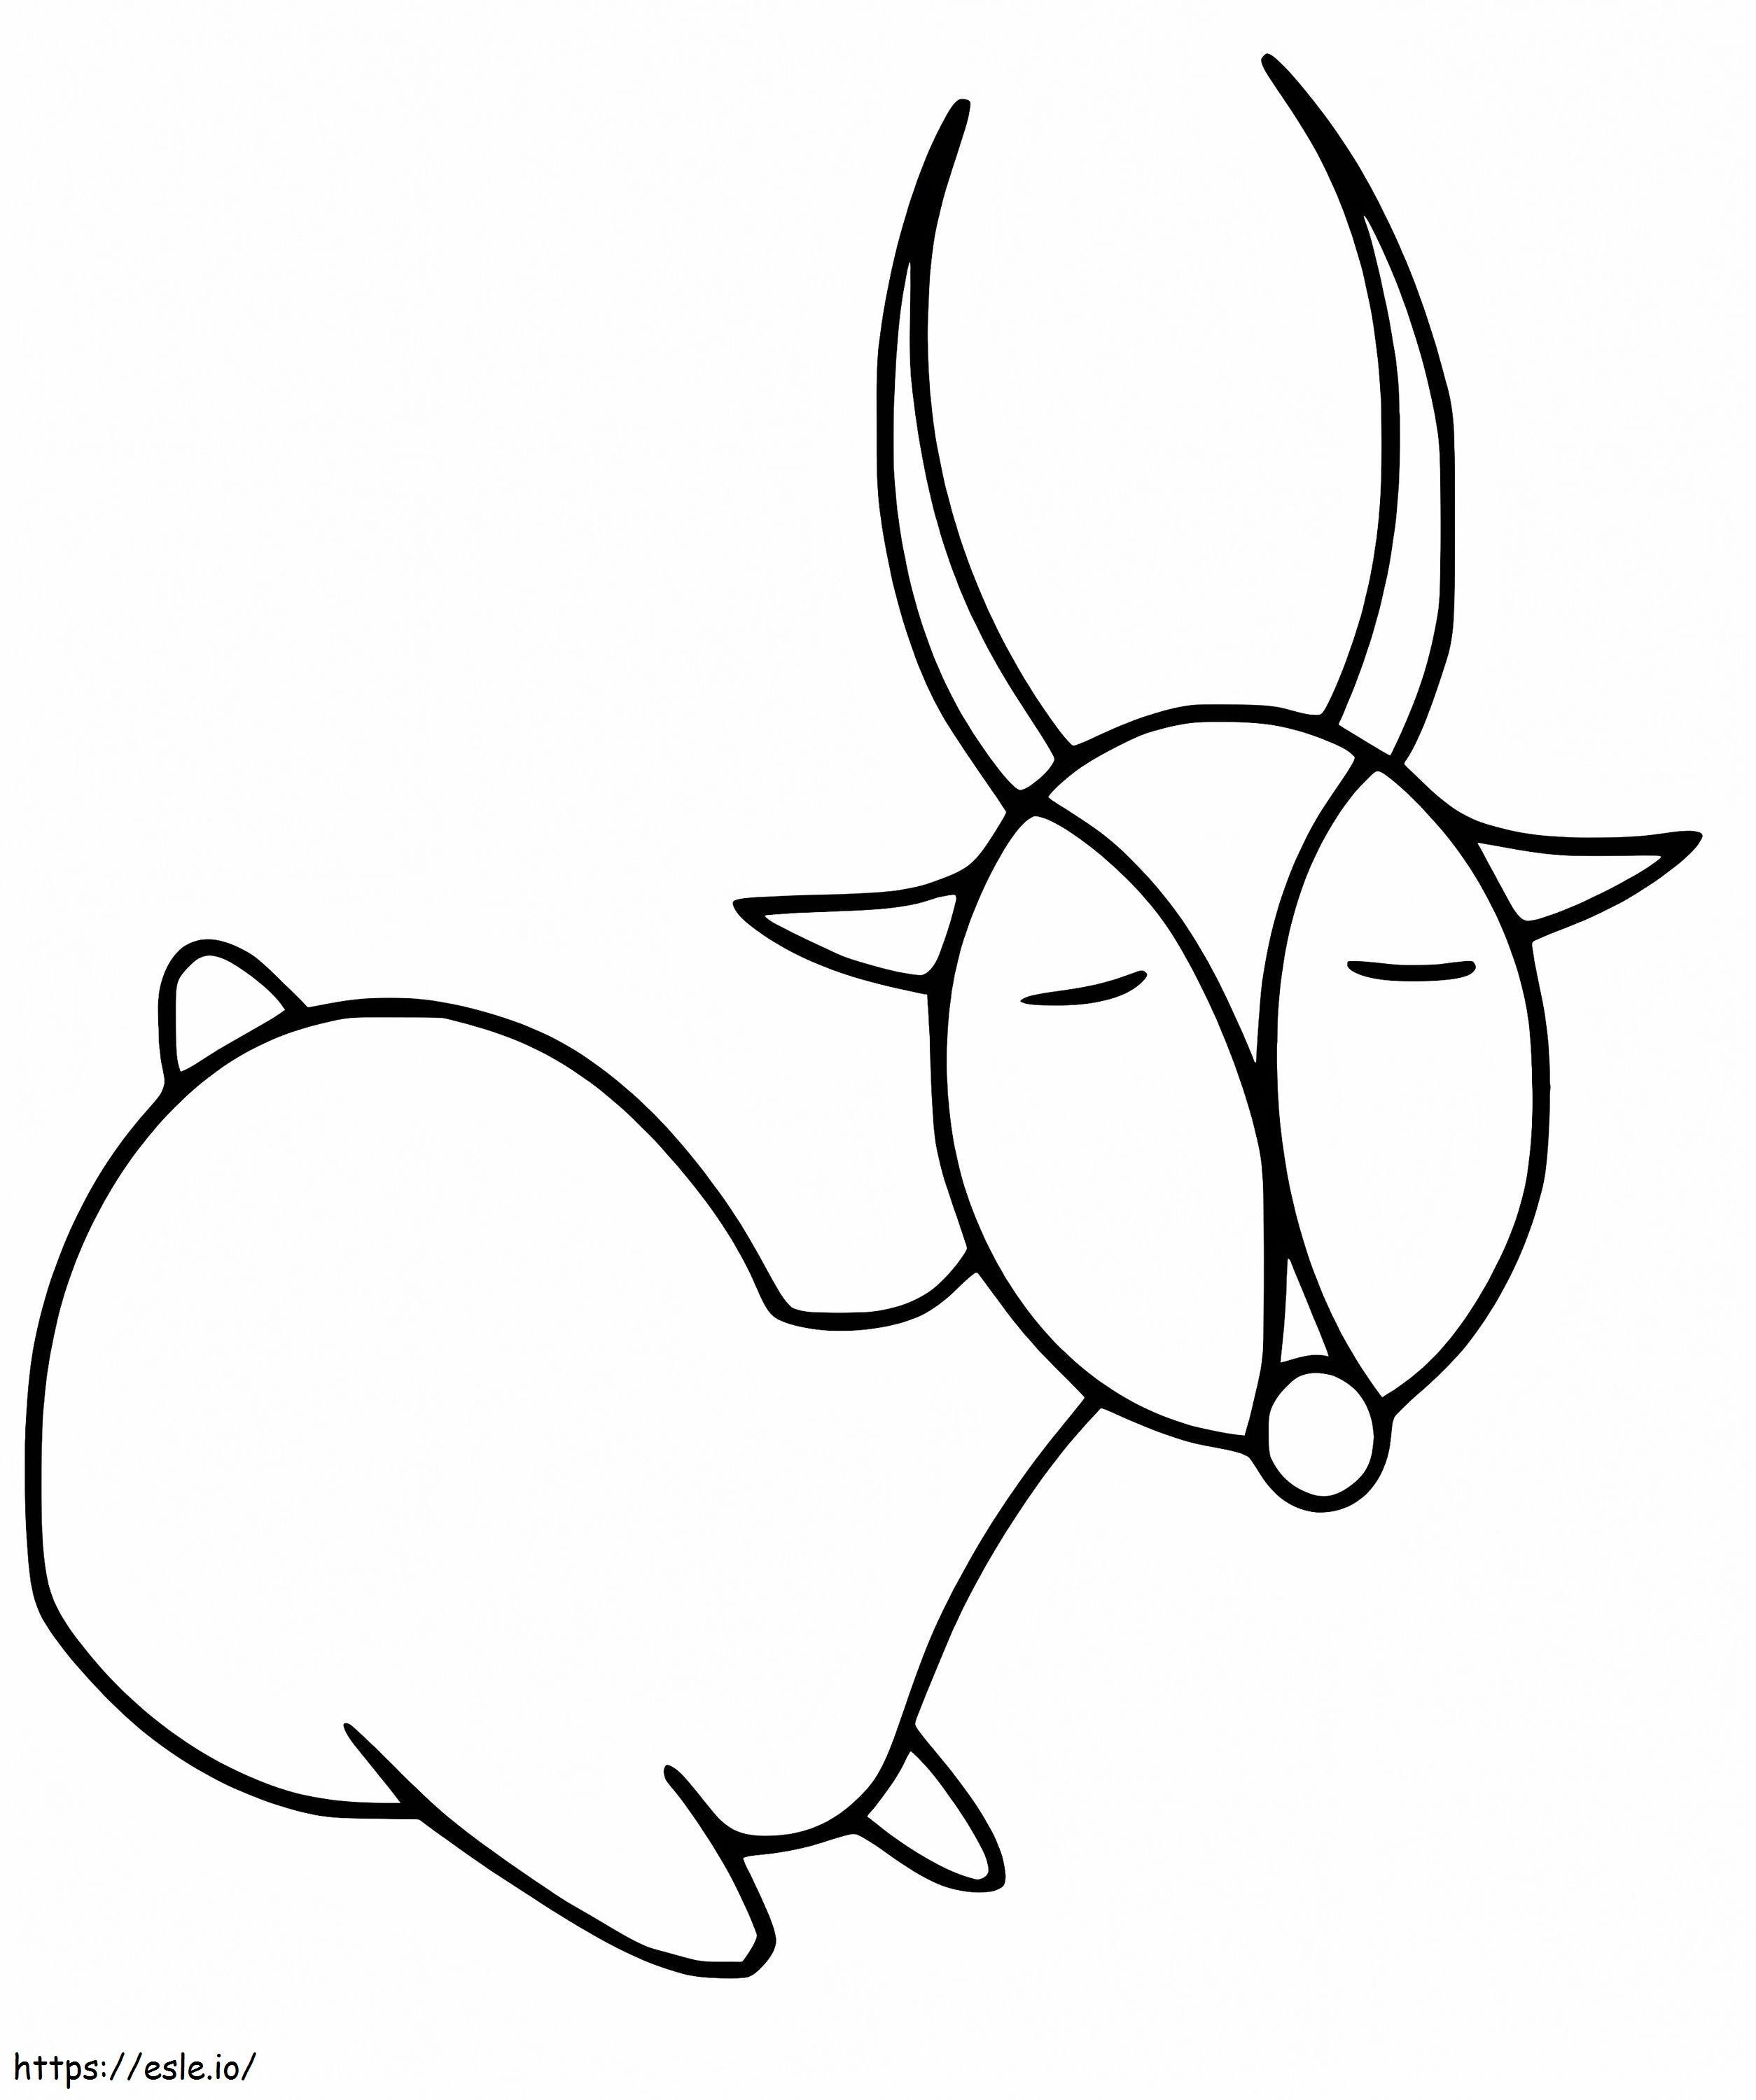 Coloriage Antilope simple à imprimer dessin